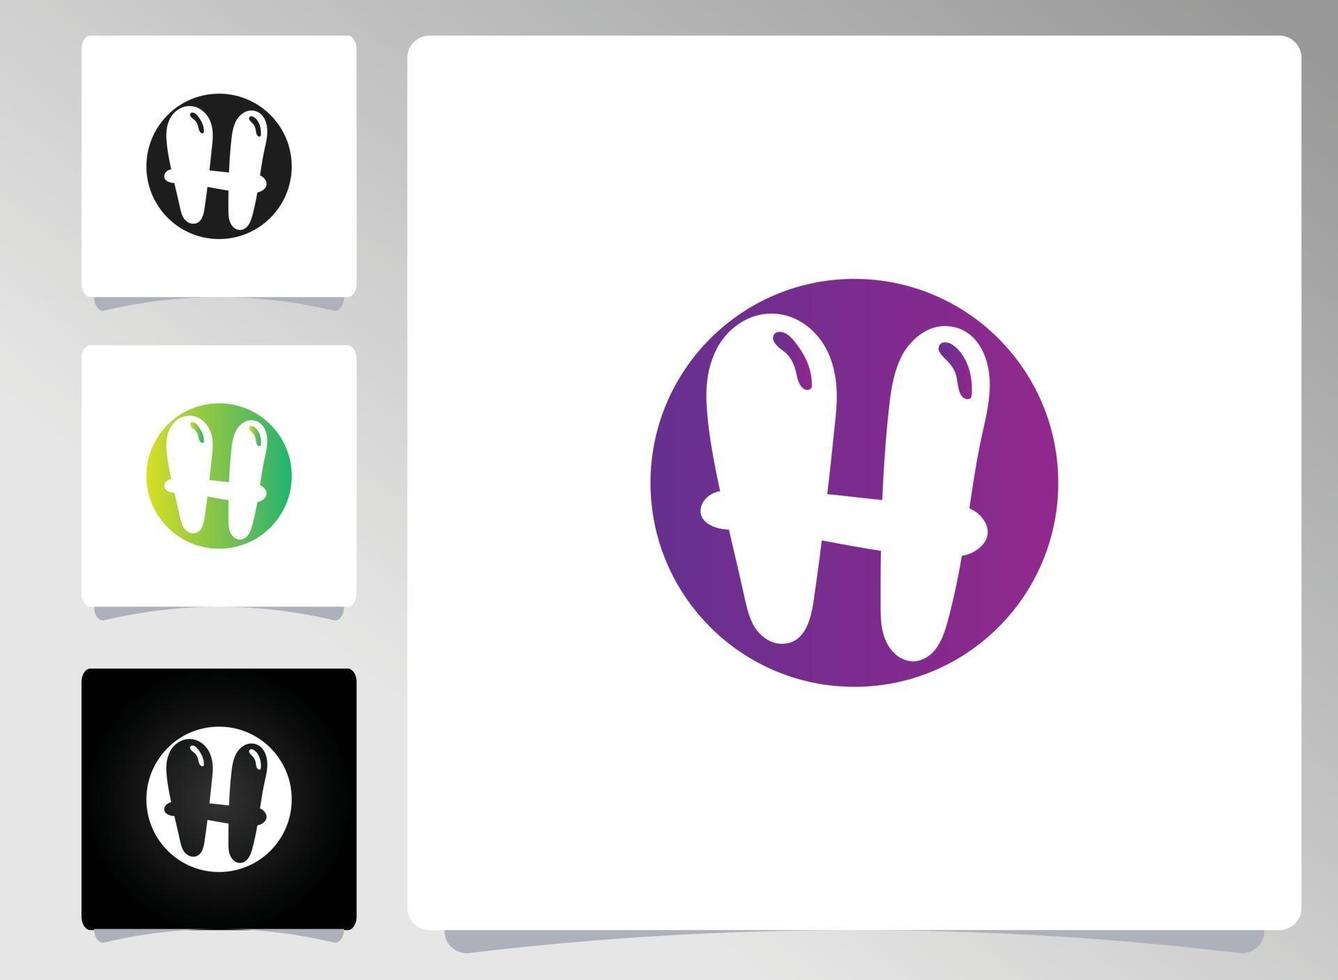 H letter logo abstract design vector